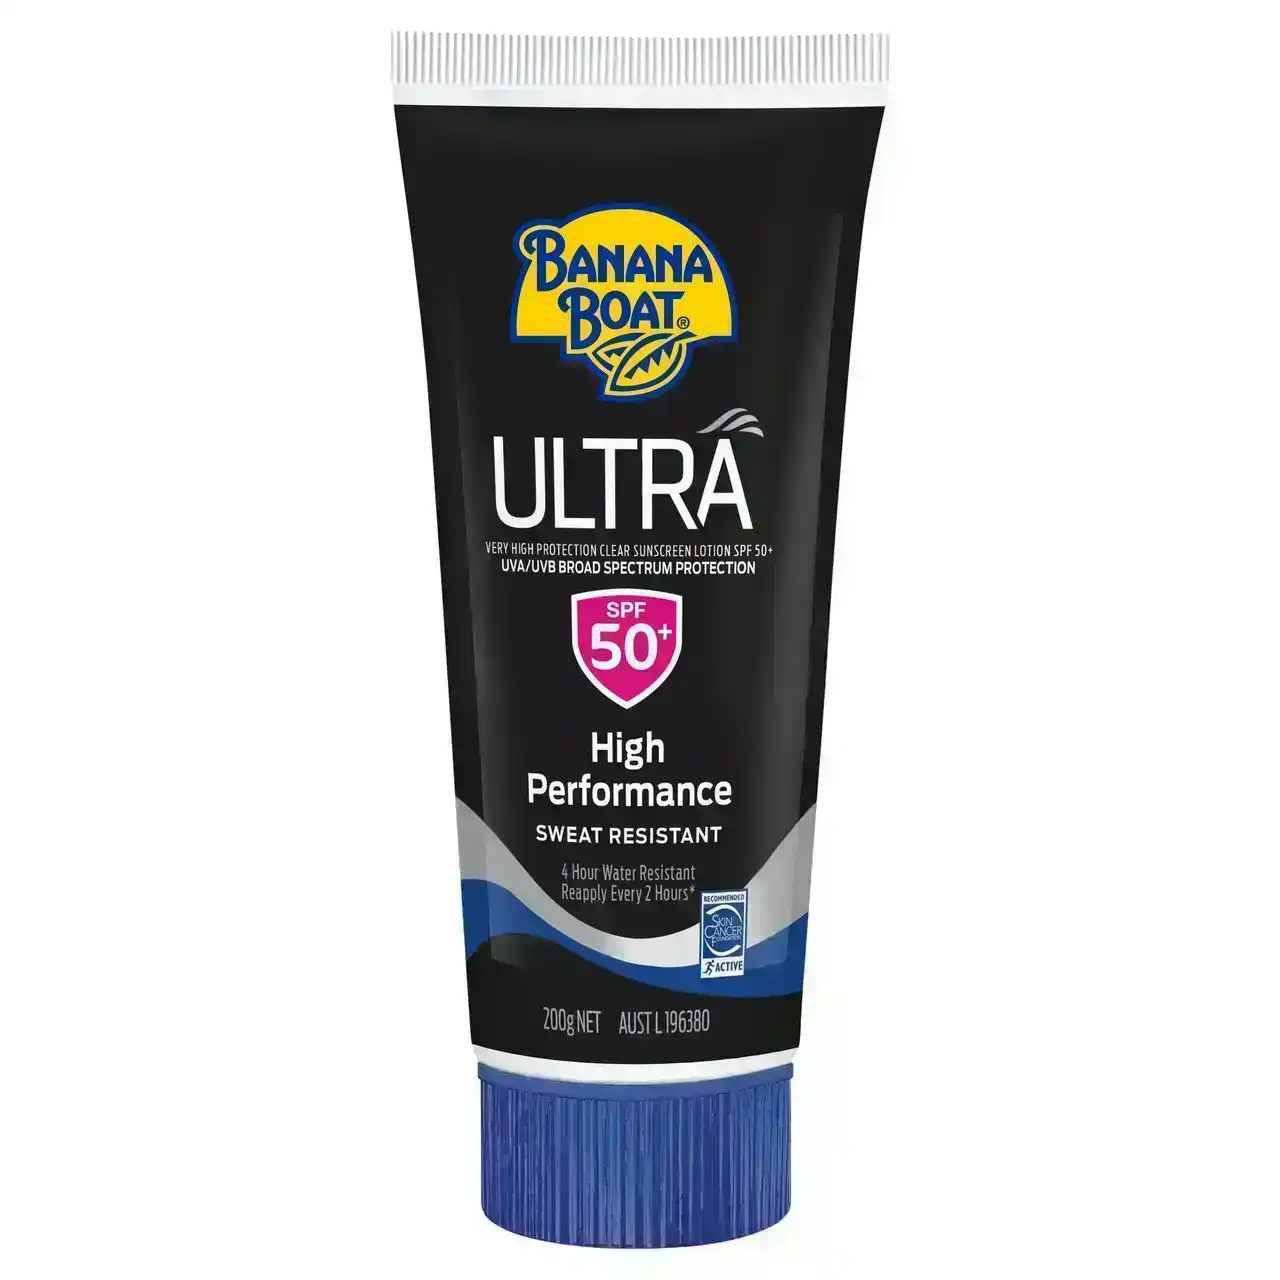 Banana Boat Ultra Sunscreen Lotion SPF 50+ 200g